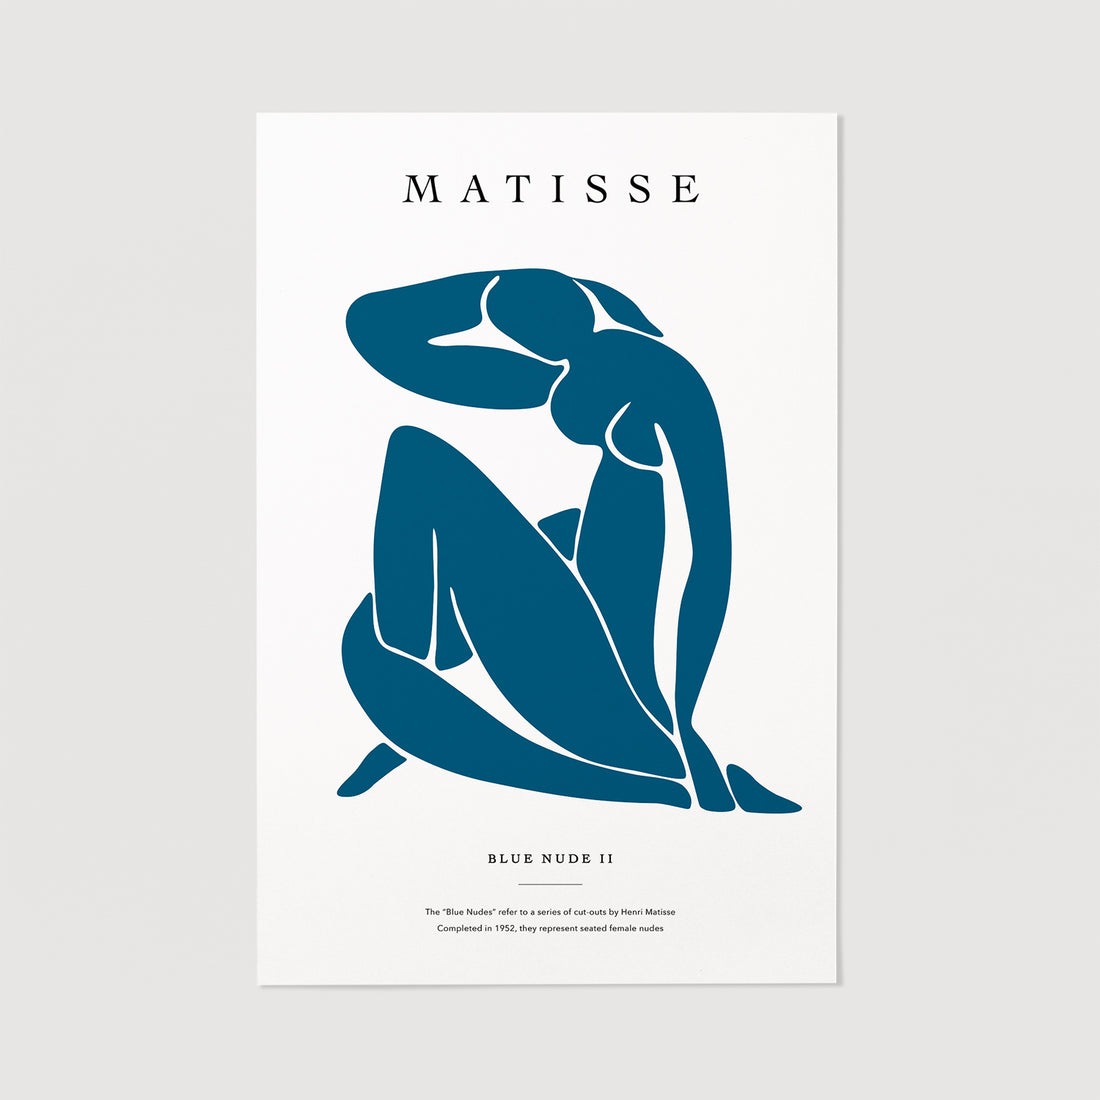 Henri Matisse painting print for home design